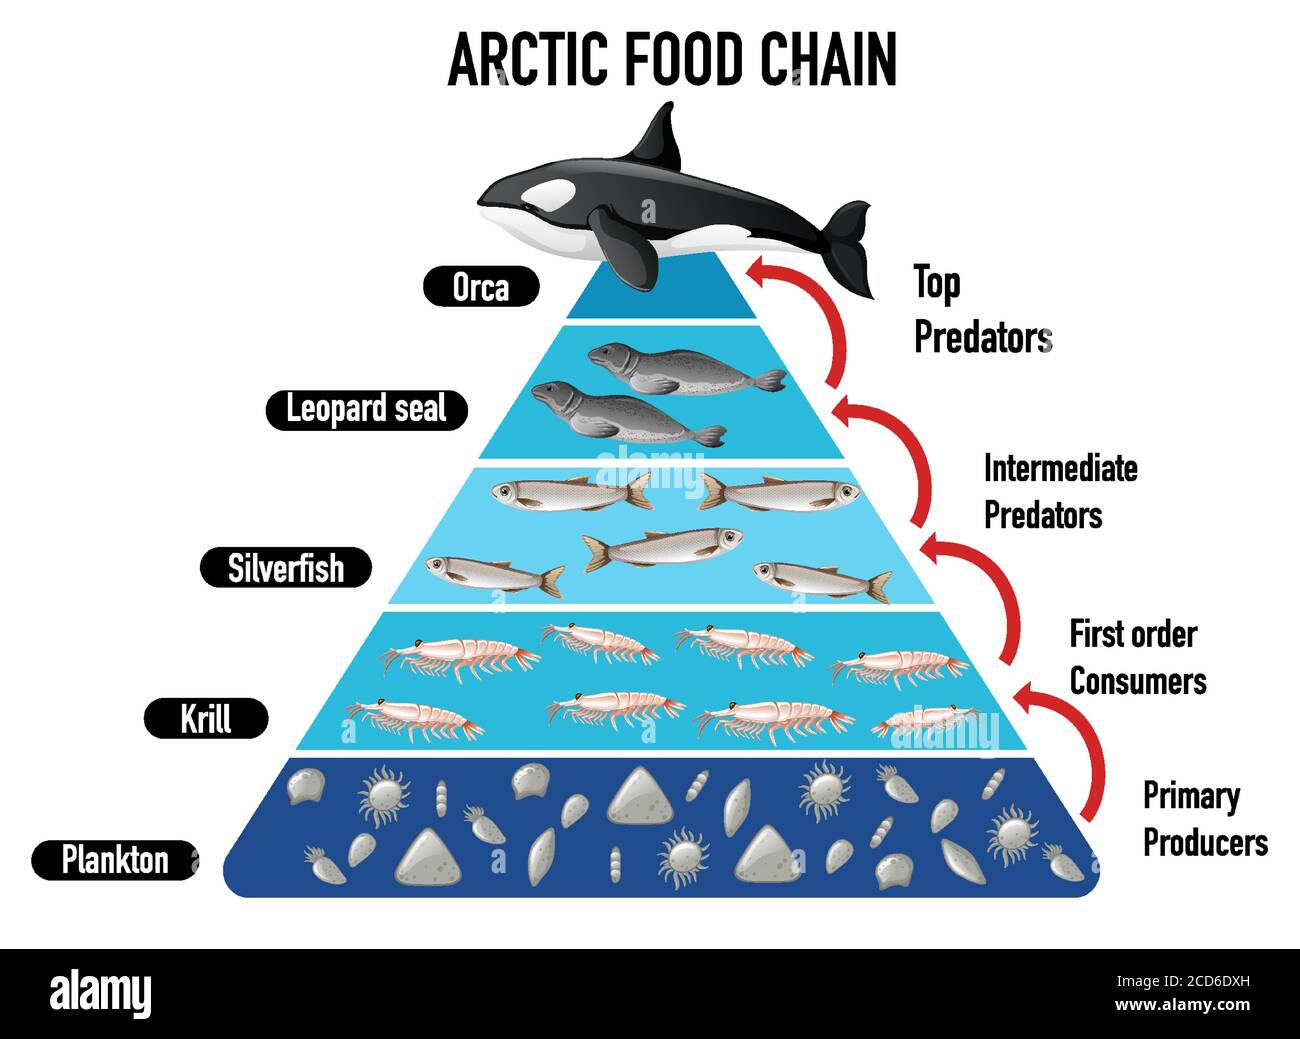 Arctic food chain pyramid illustration Stock Vector